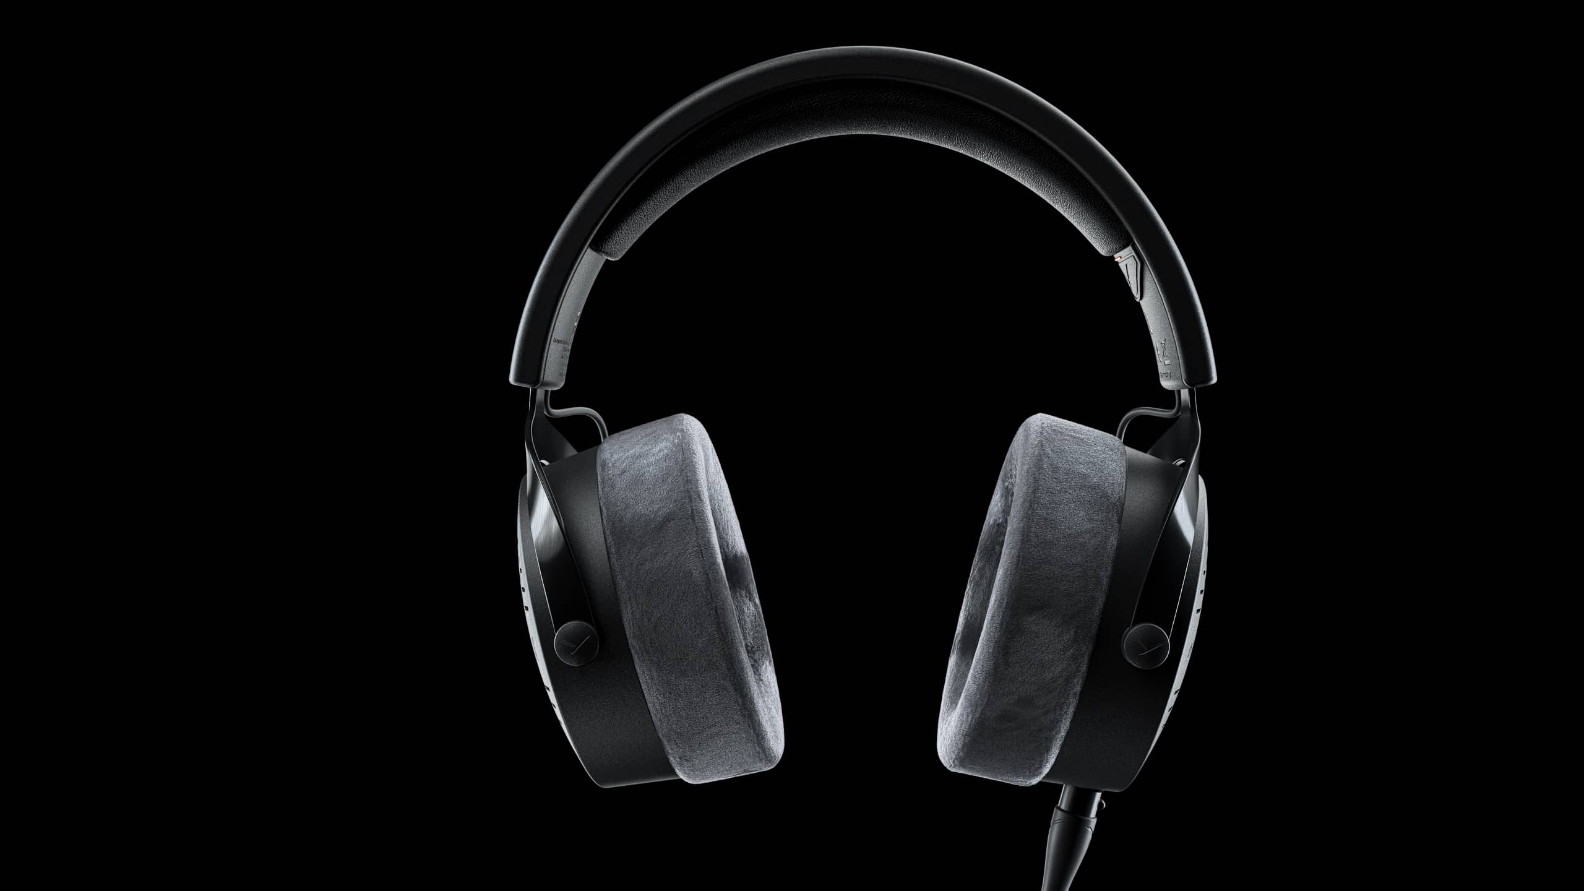 Beyerdynamic DT 900 PRO X (48 ohms) DT900 Pro X - Open Back Studio Headphones for Mixing & Mastering